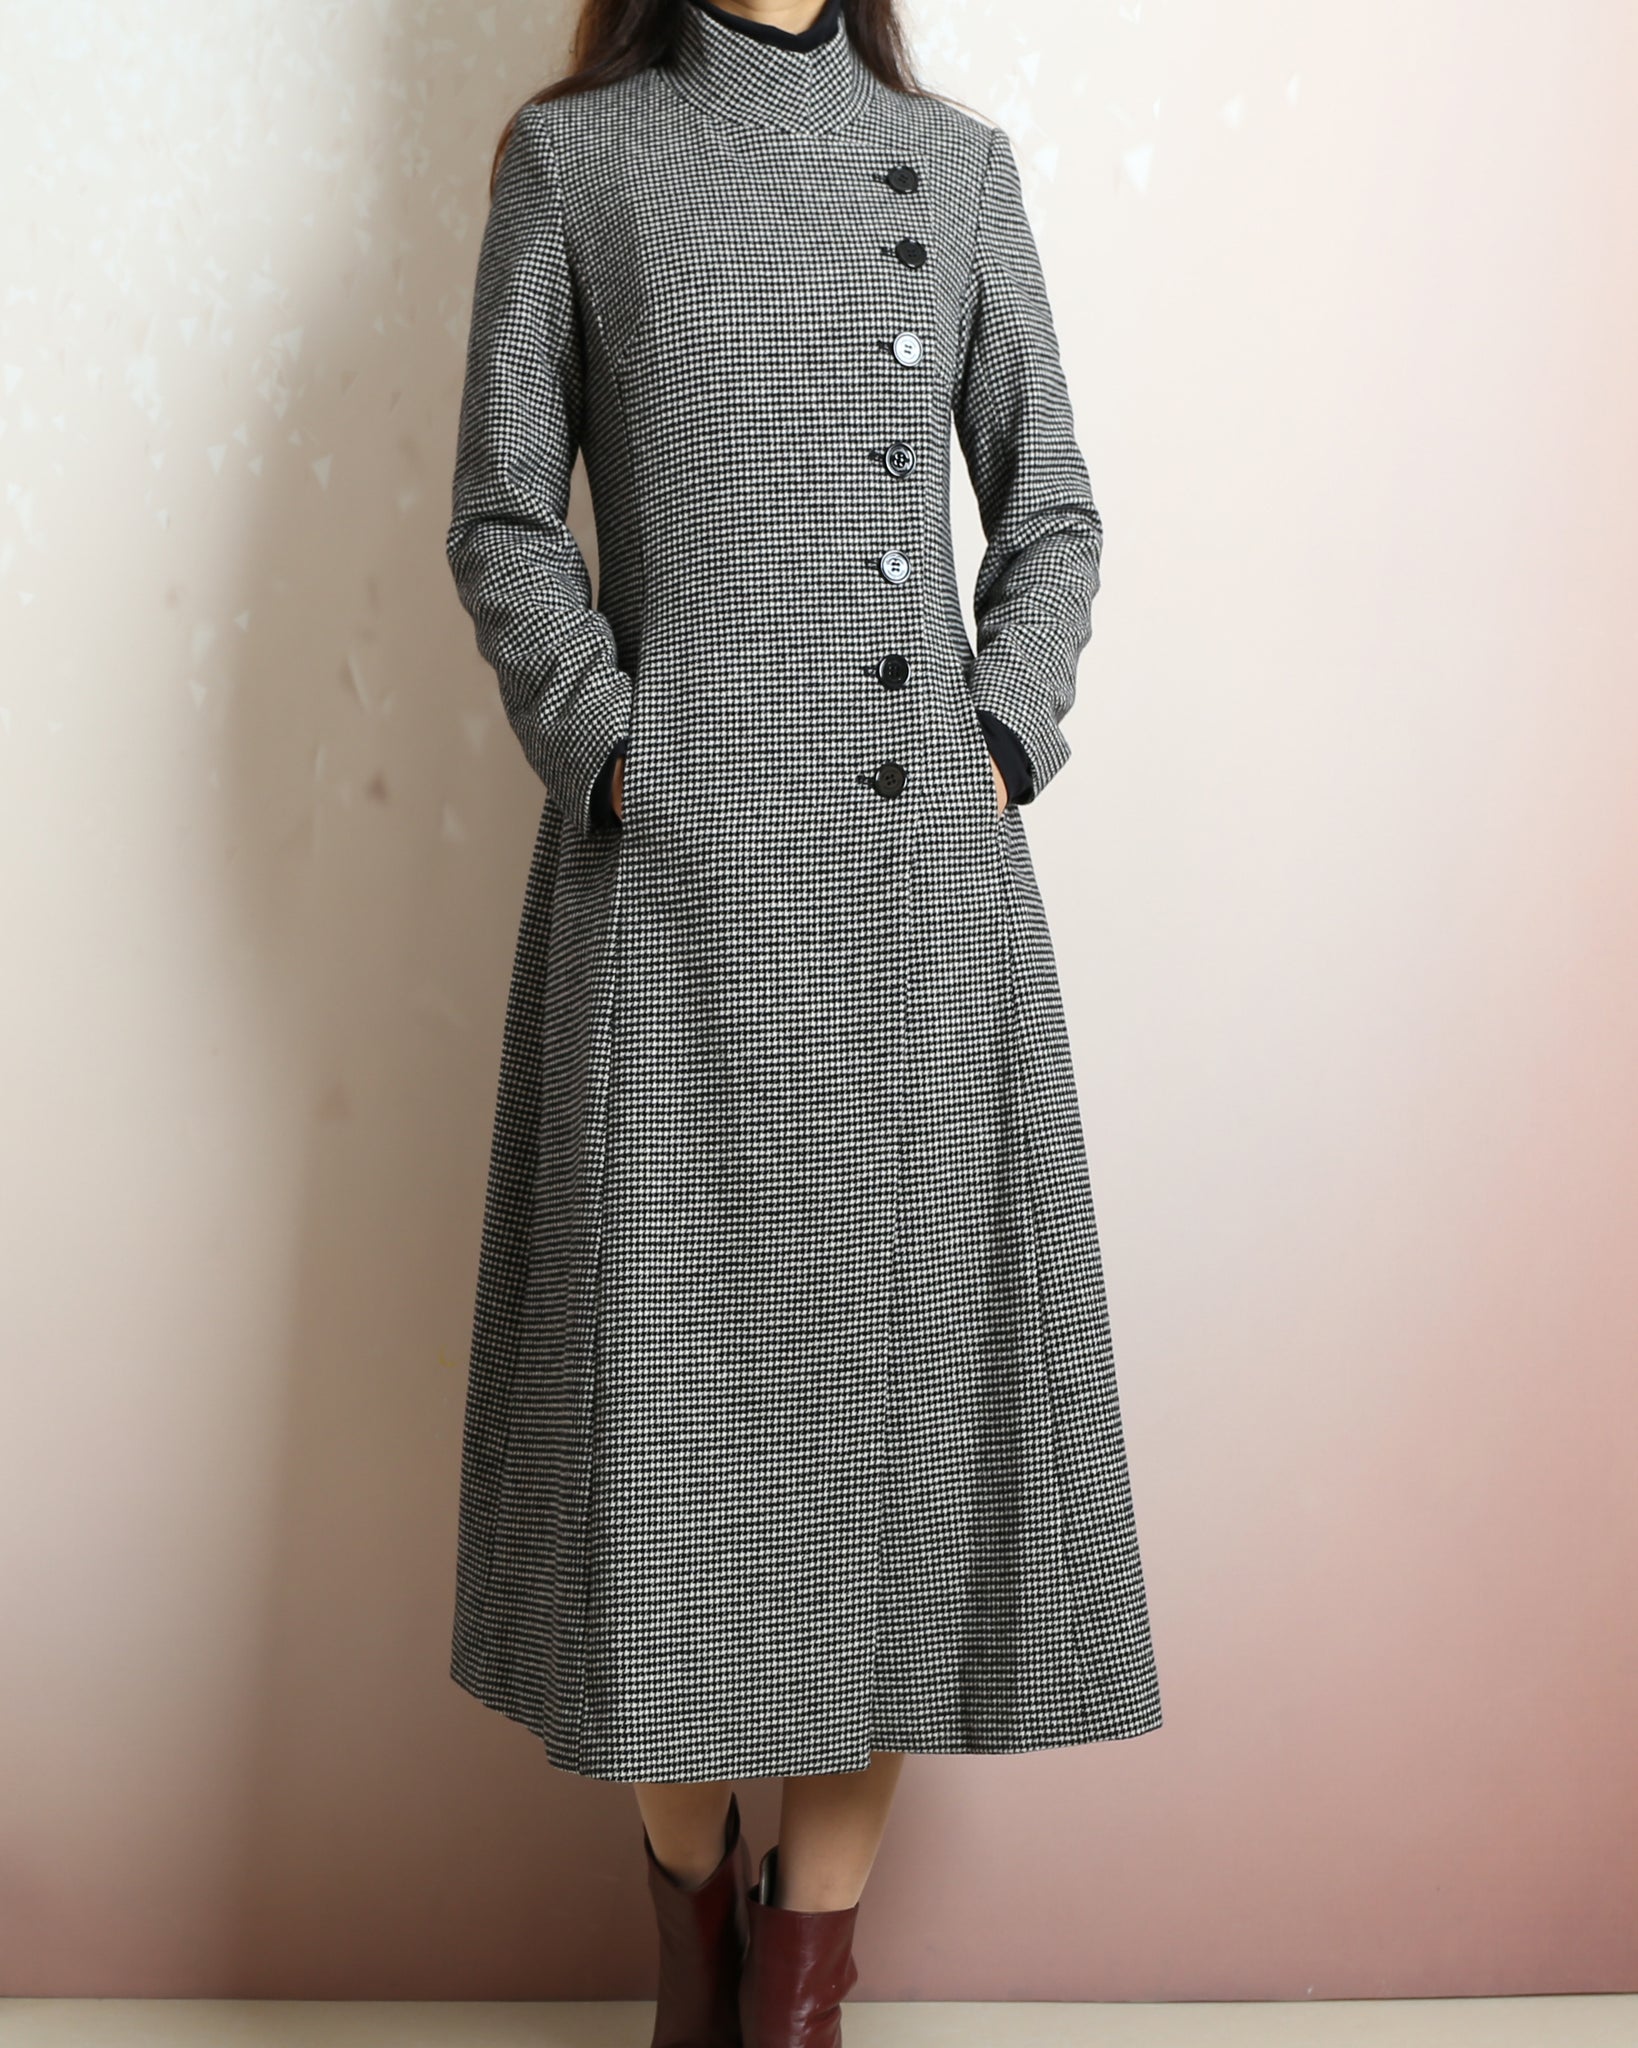 Plaid coat, Long wool coat, coat dress, gray warm coat, winter